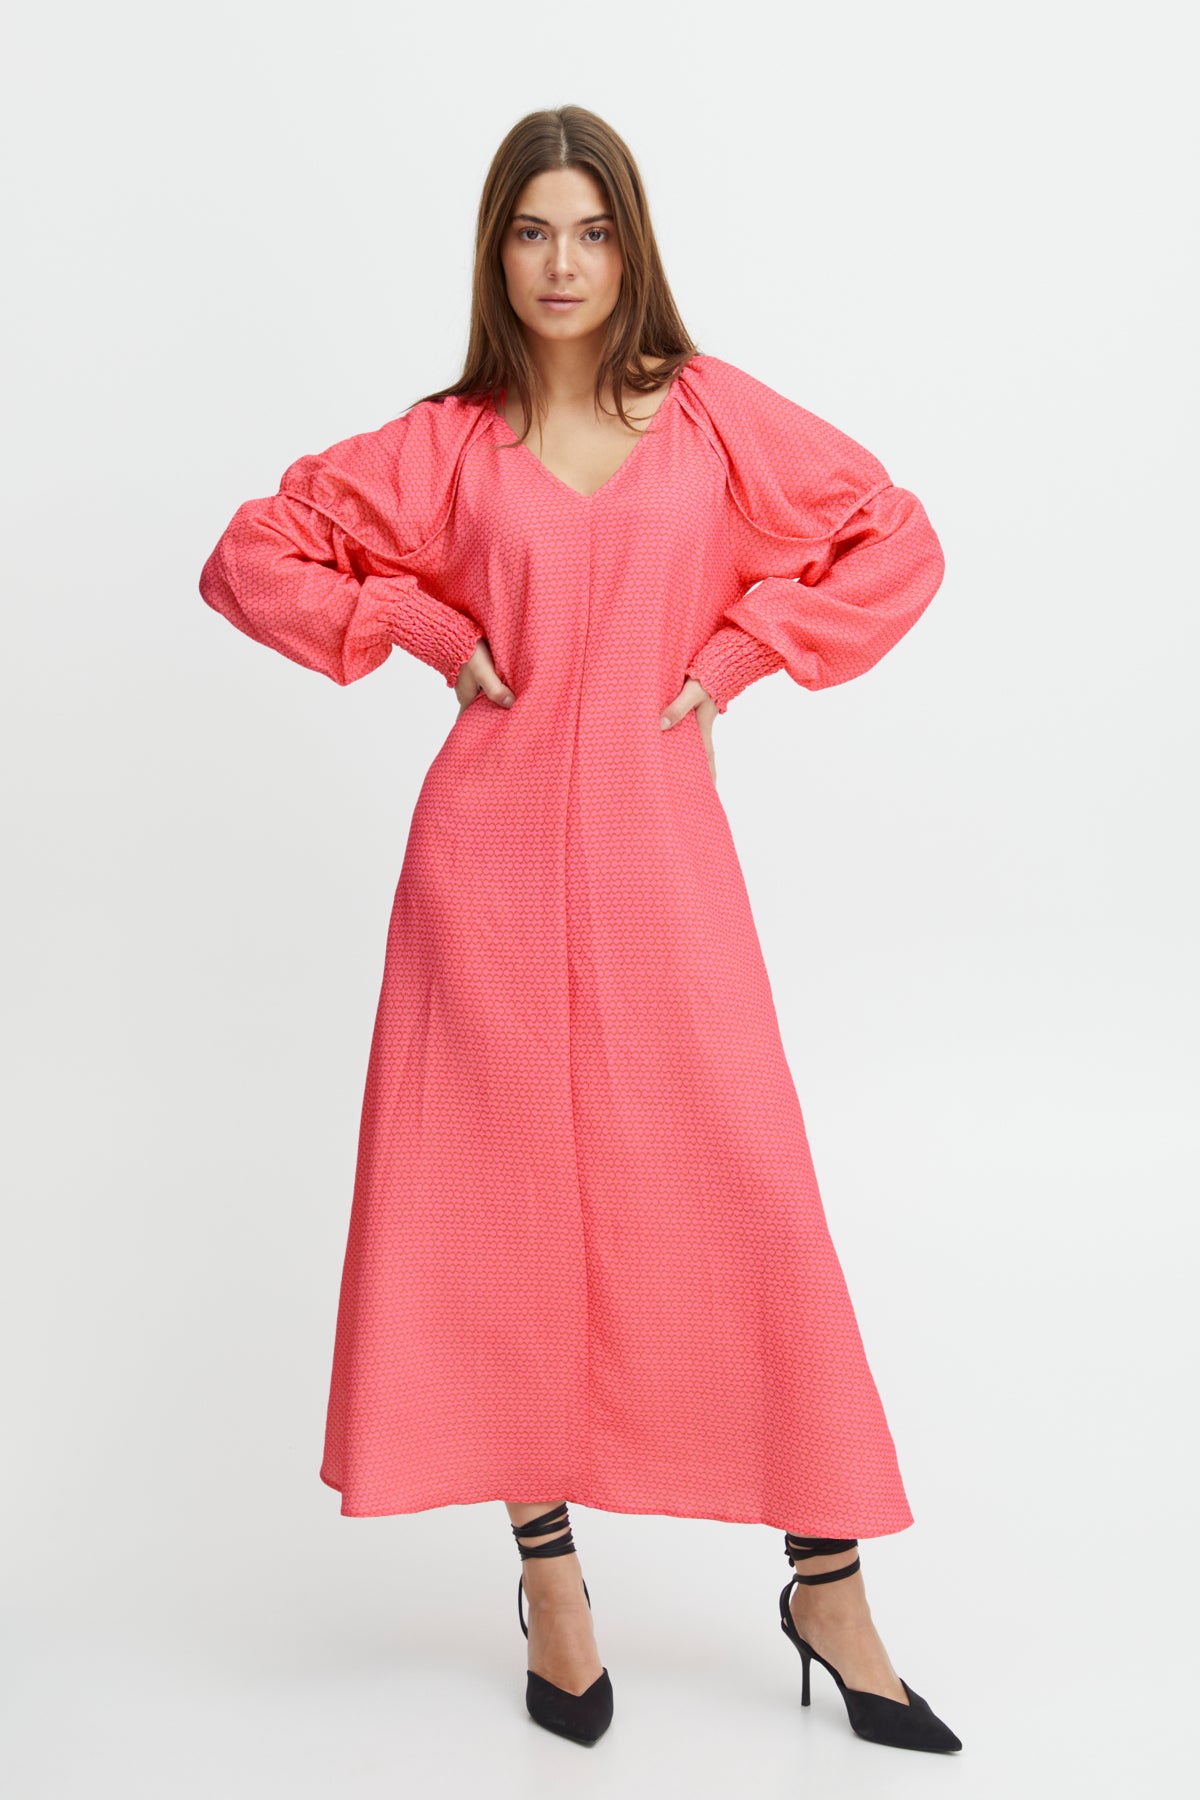 Savino Dress - Pink Printed